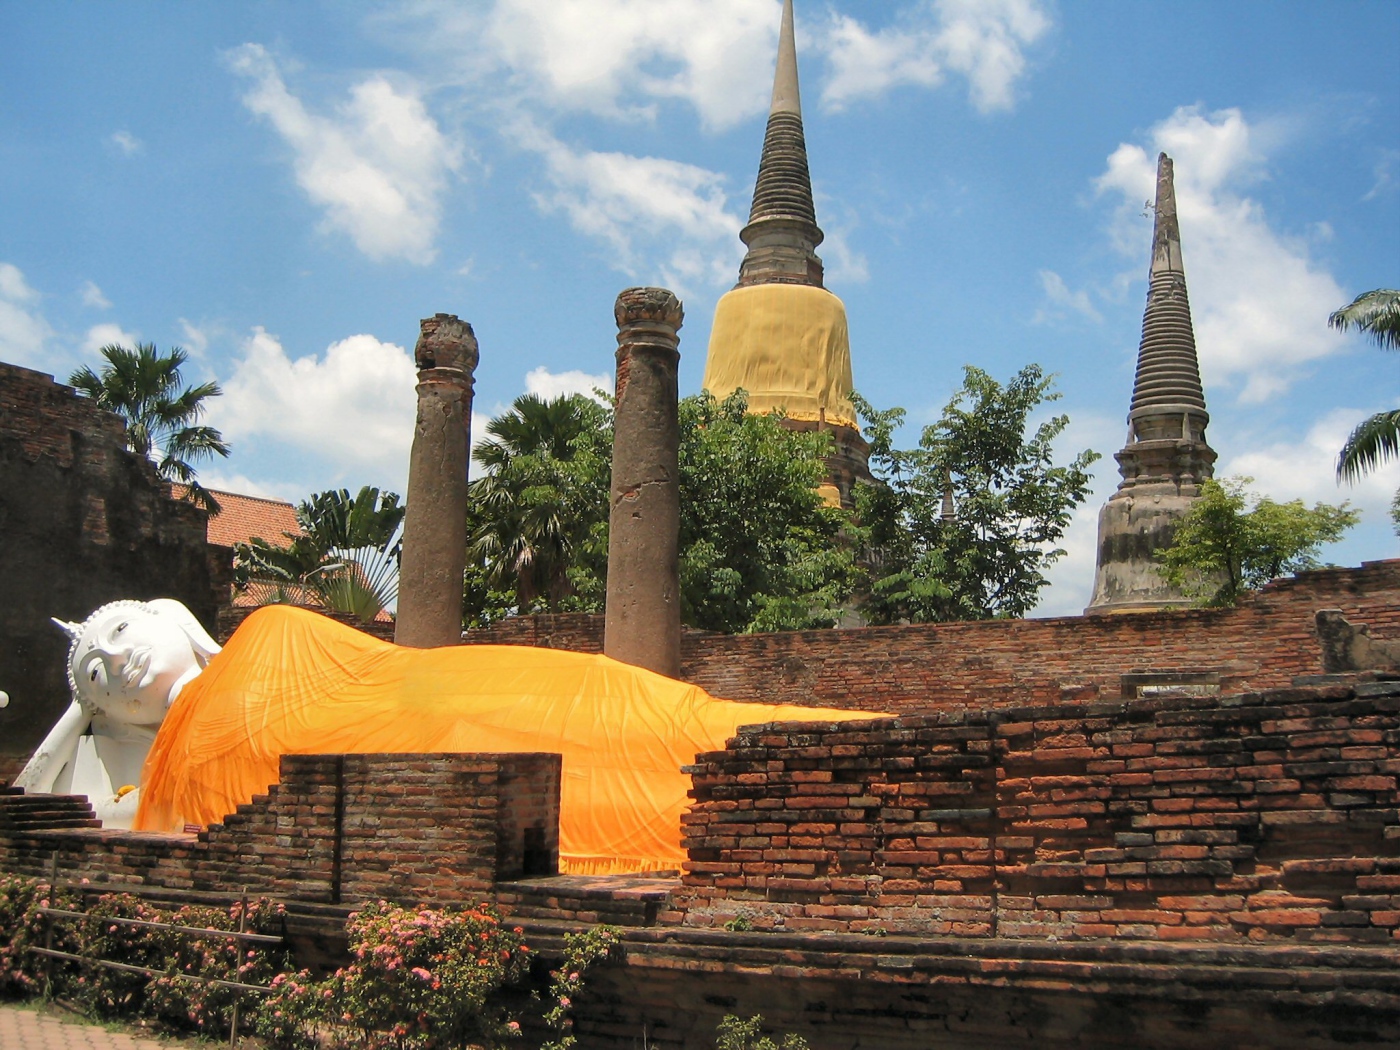 Reclining Buddha at the resort Ayuthaya, Thailand